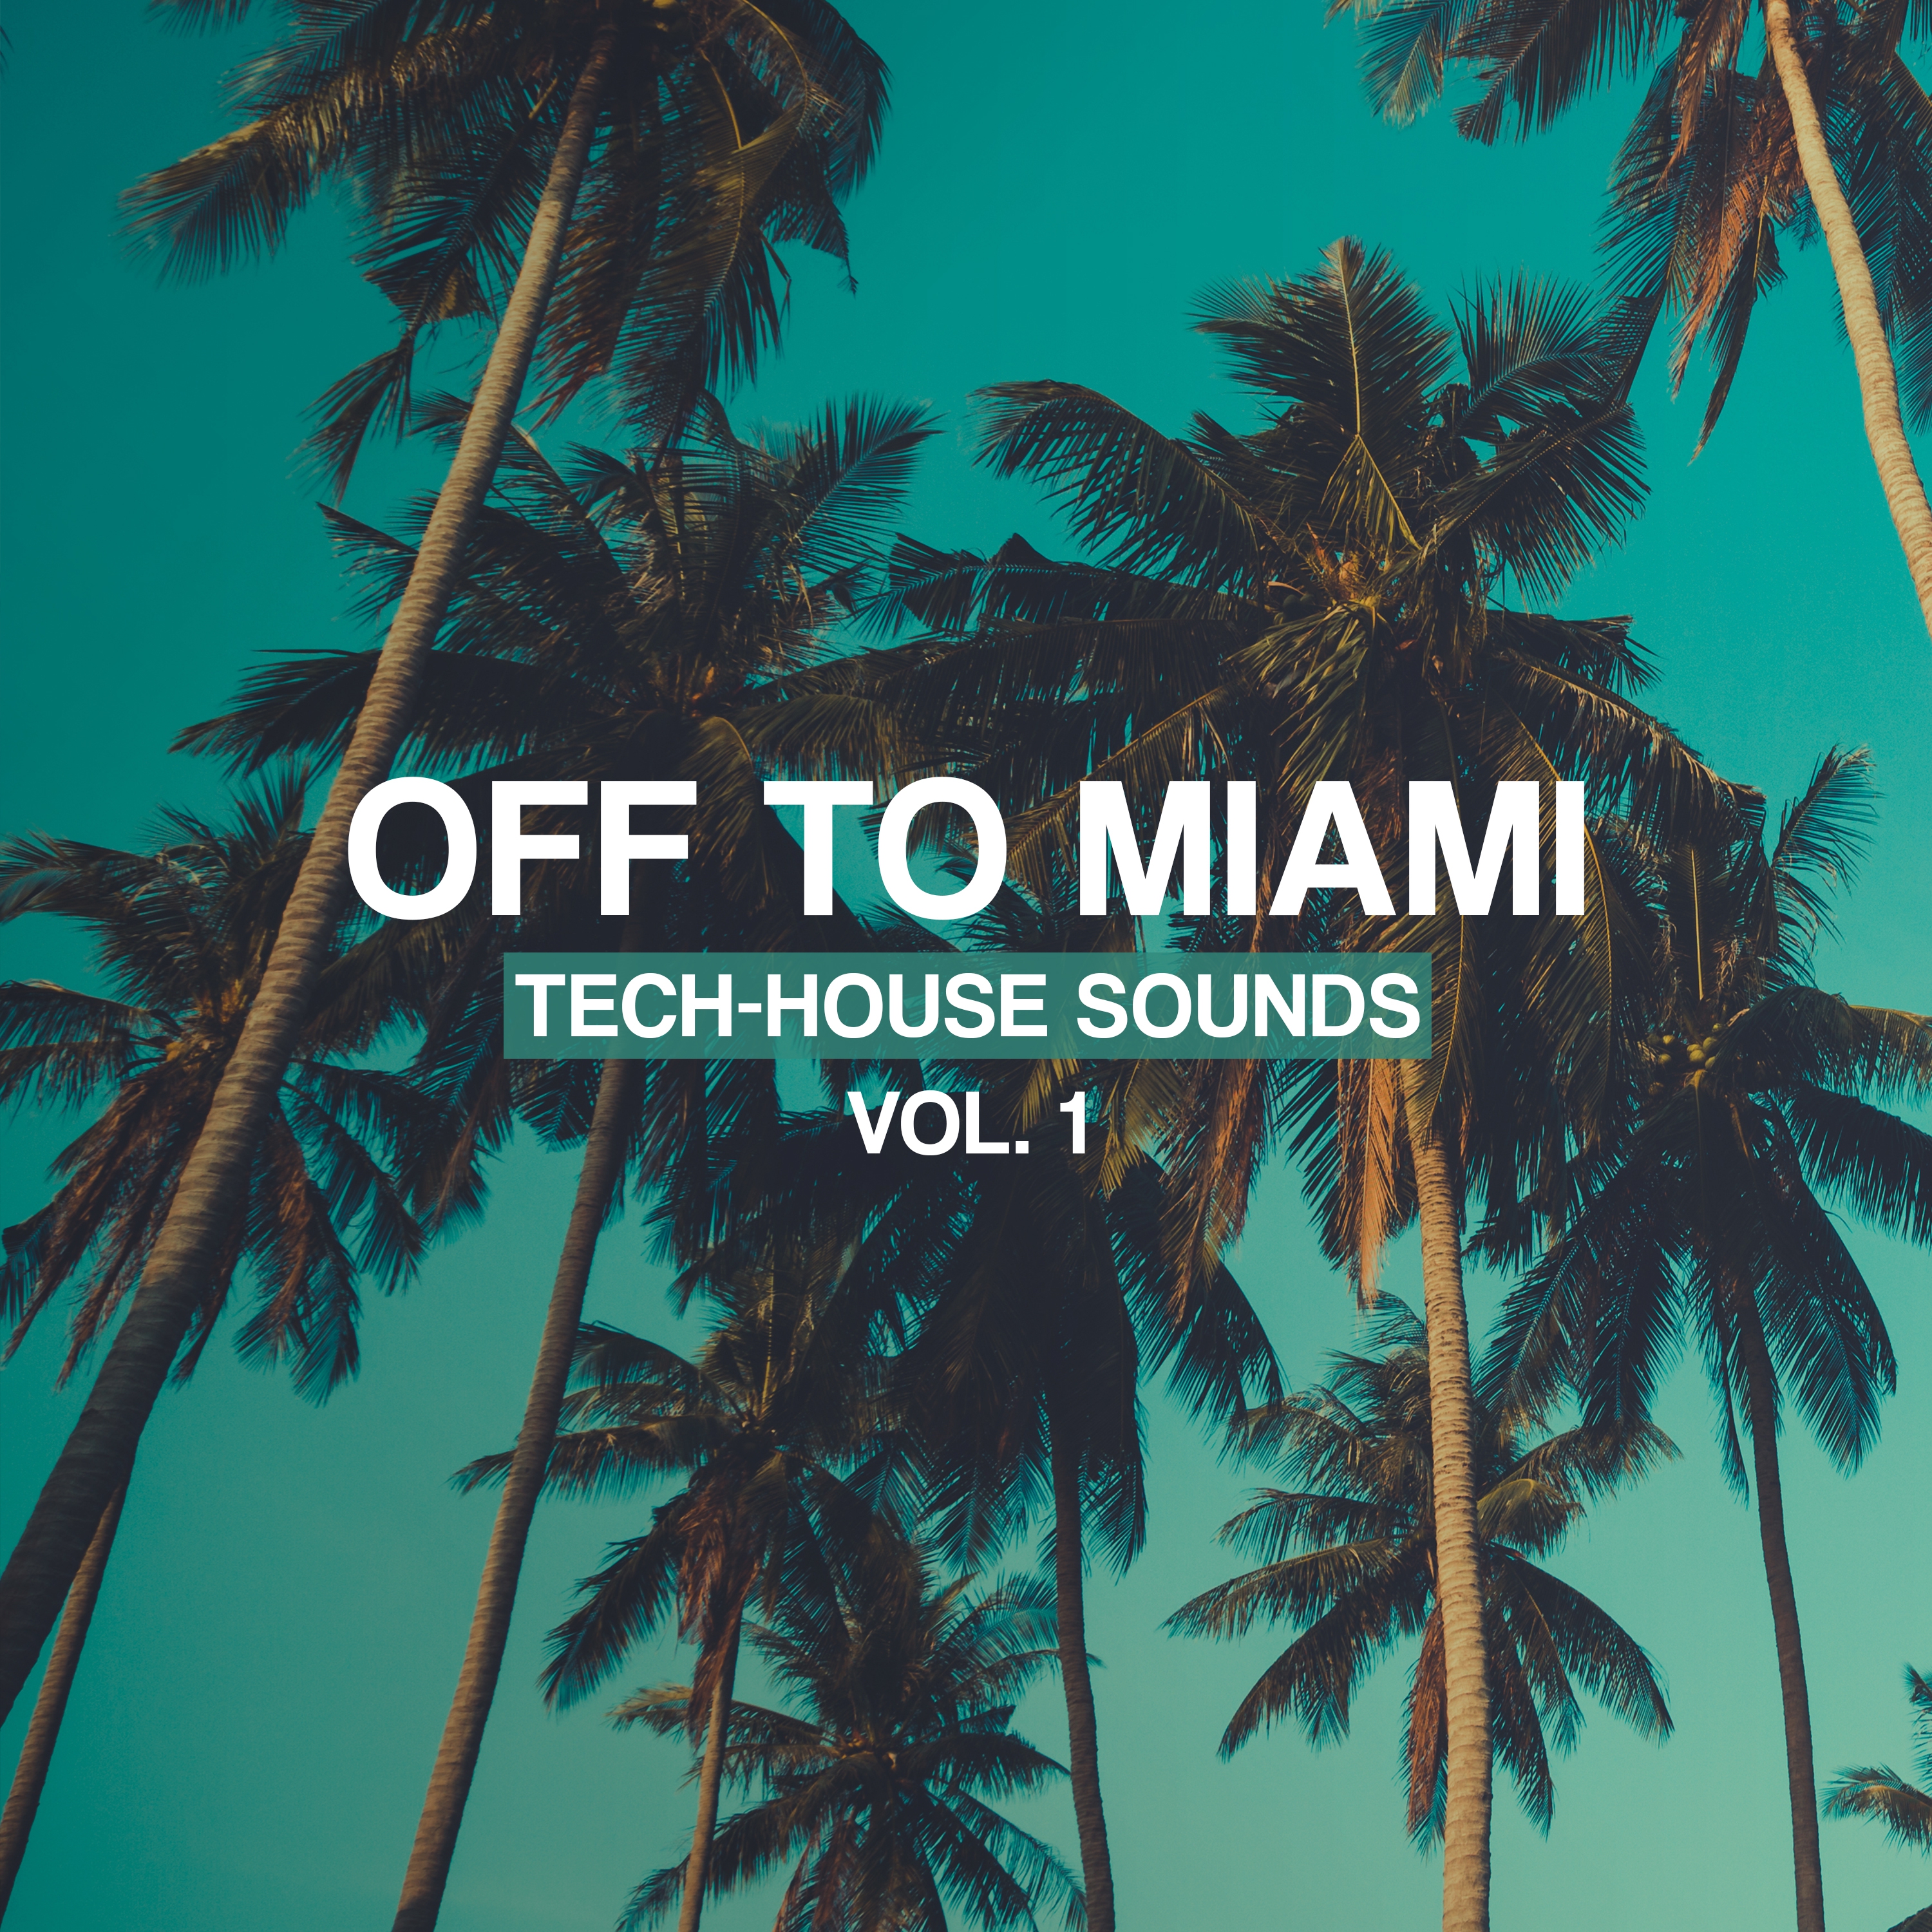 Off to Miami, Vol. 1 - Tech-House Sounds